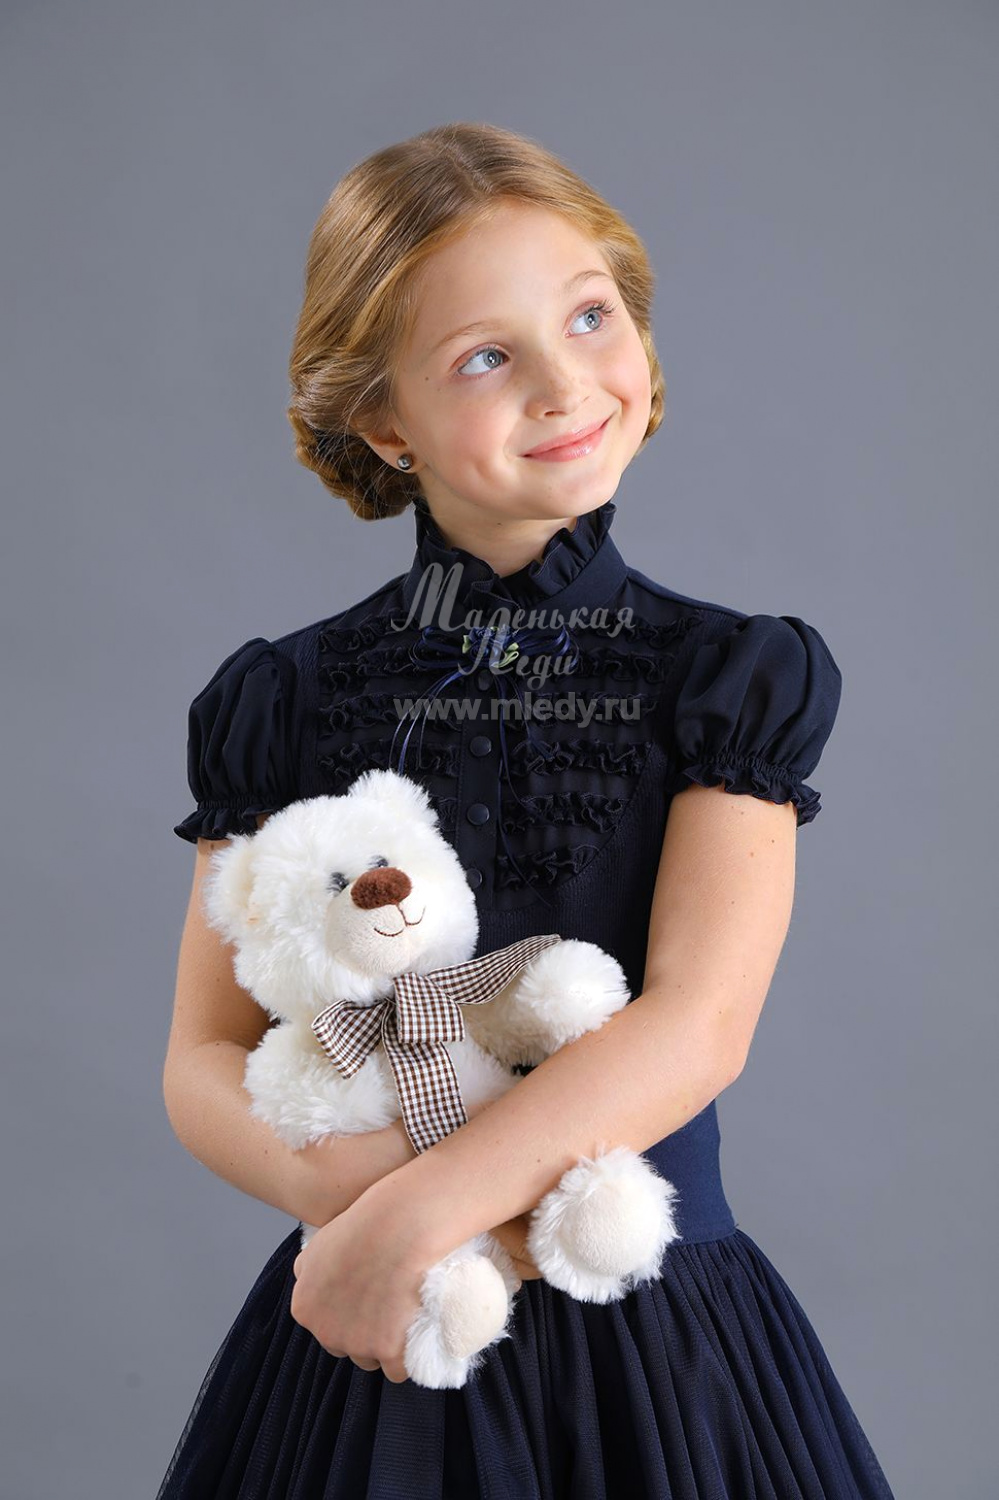  Блузка с коротким рукавом для девочки из трикотажа хлопкового, цвет 